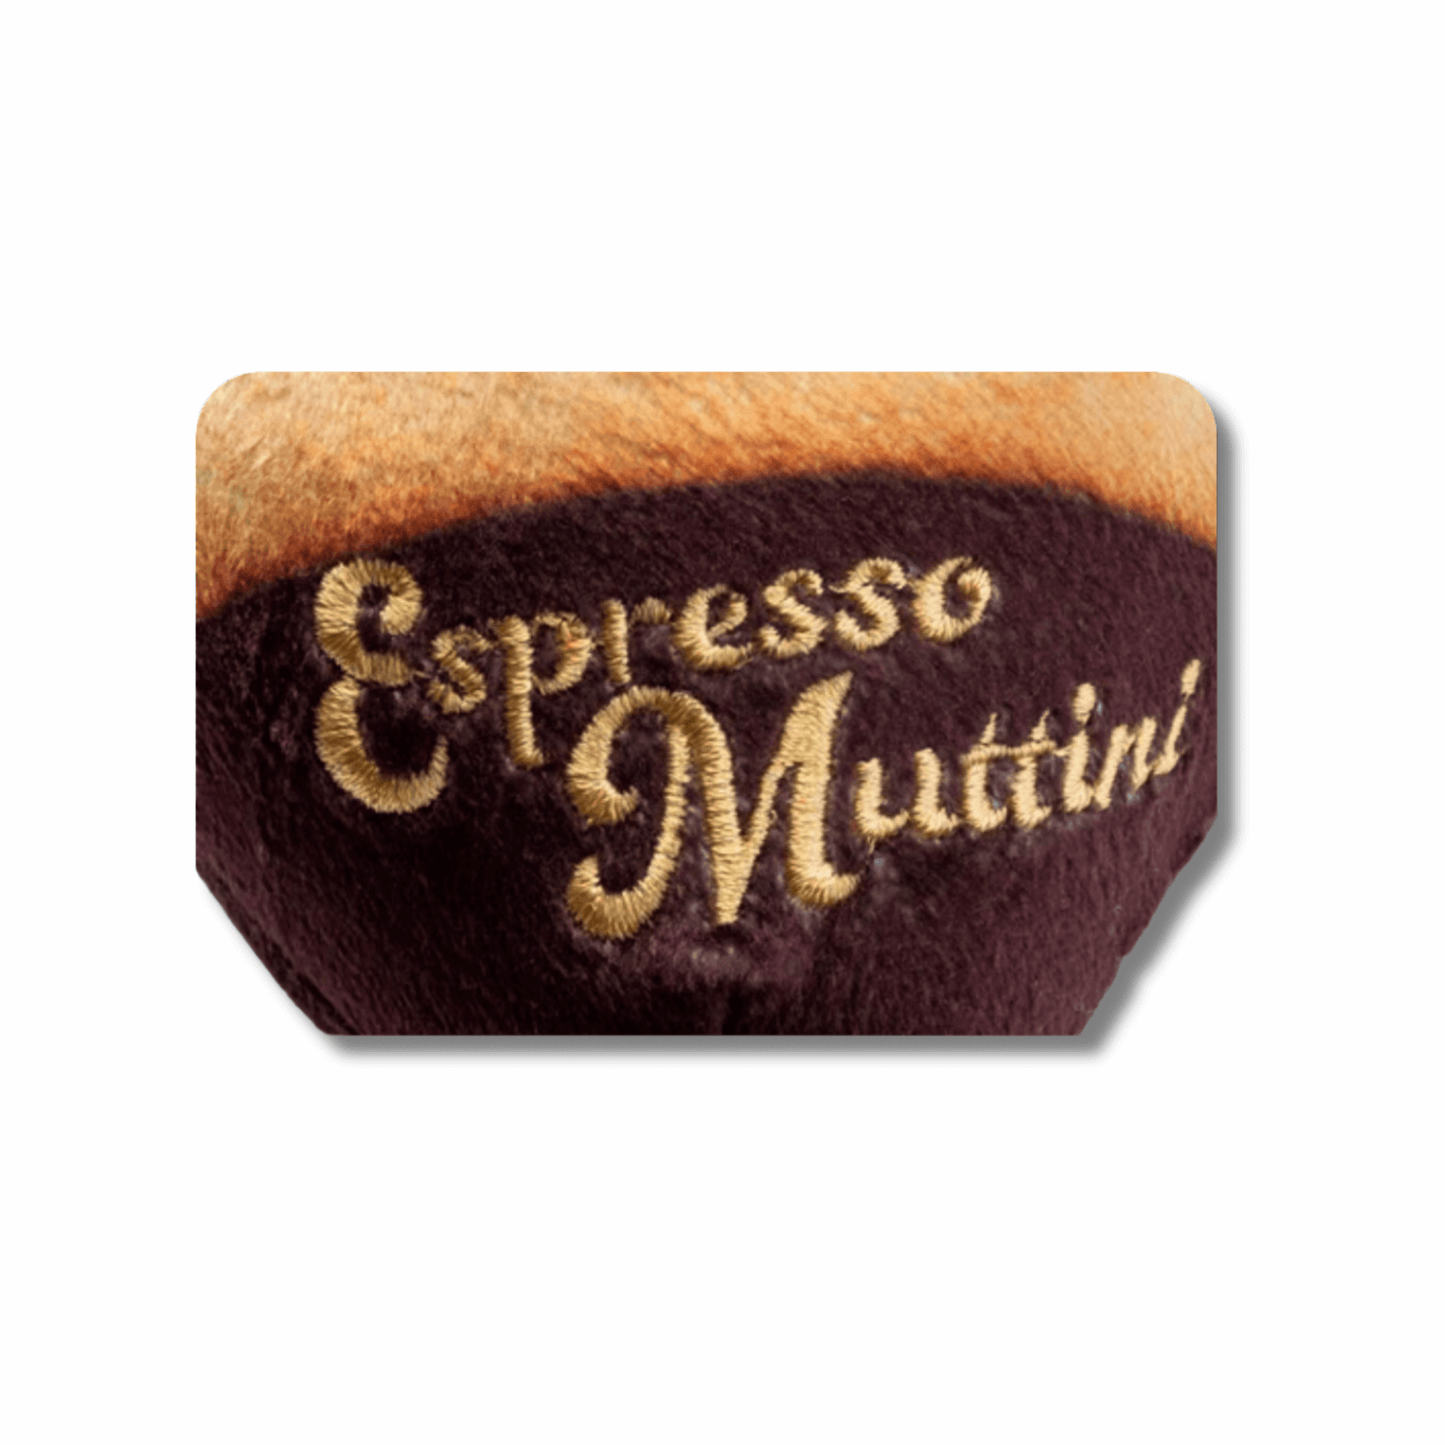 espresso muttini dog toy 